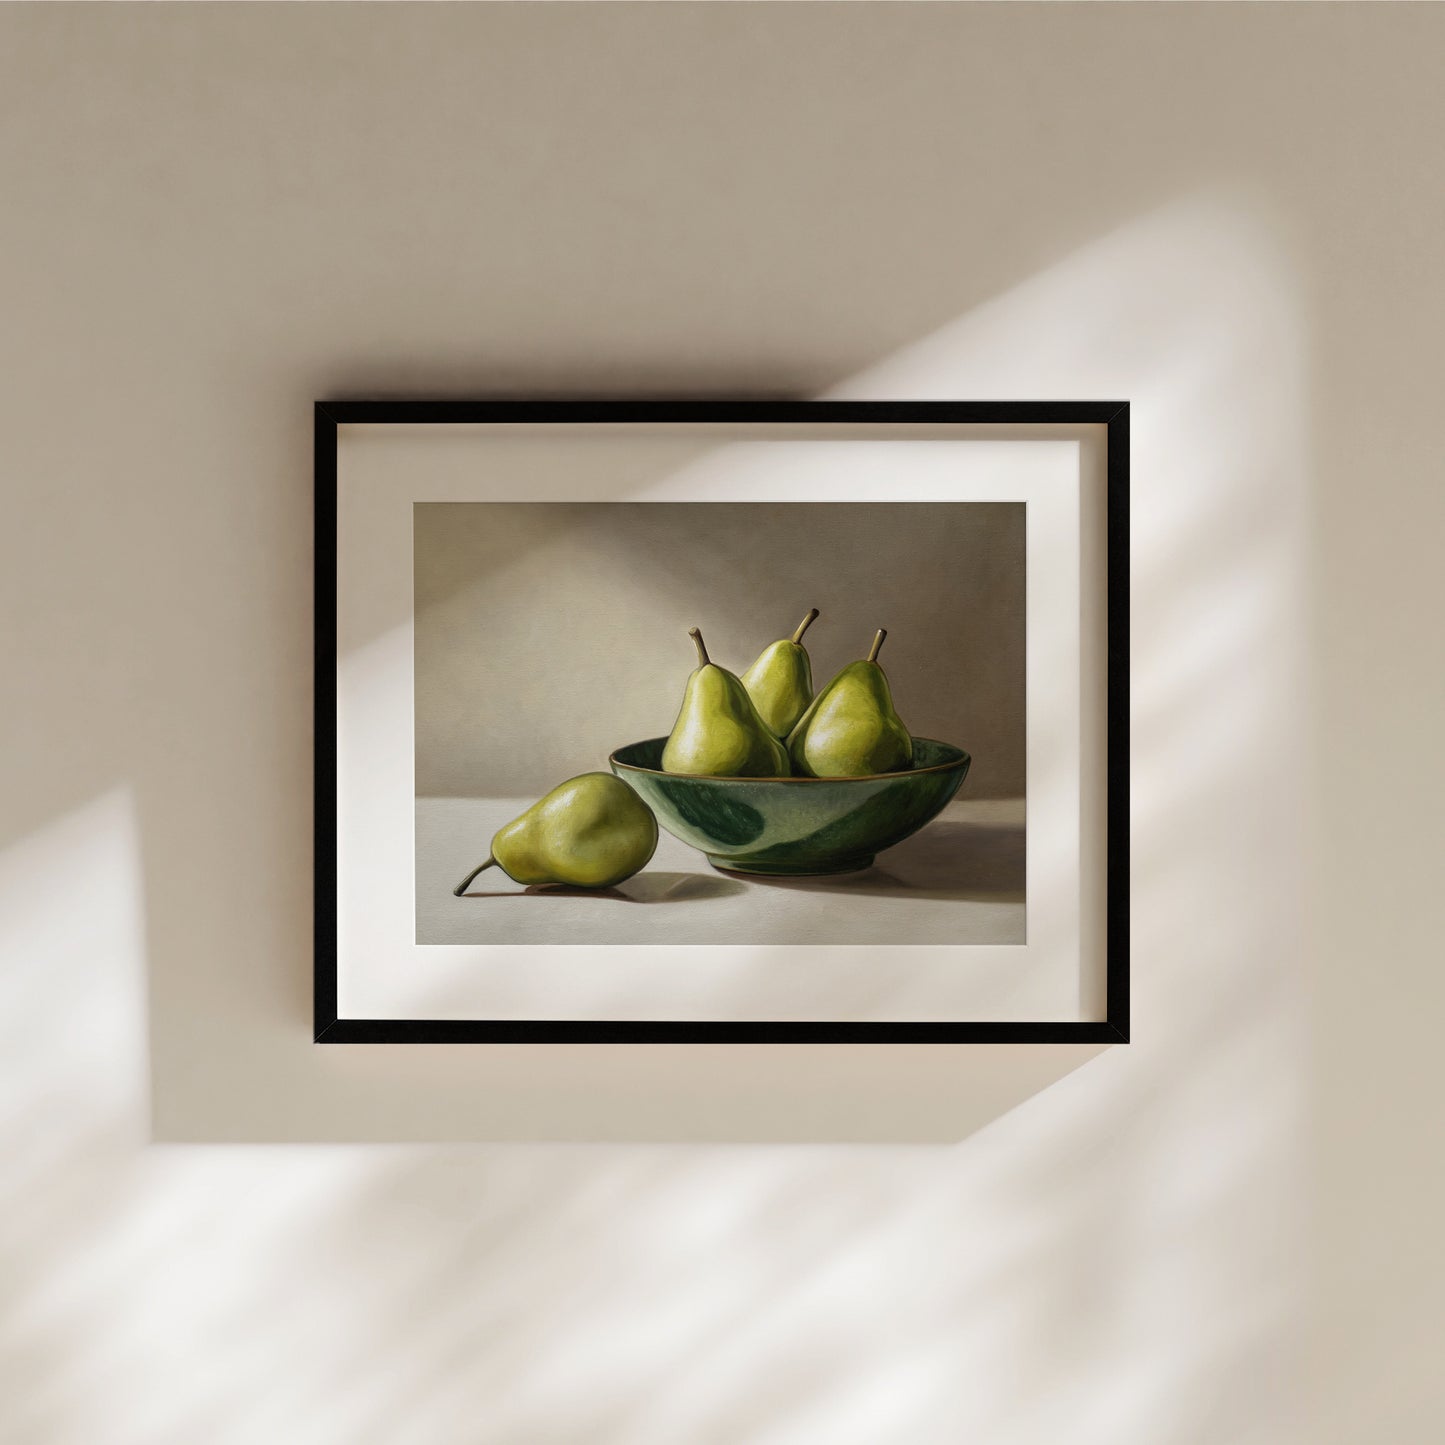 Pears & Green Bowl